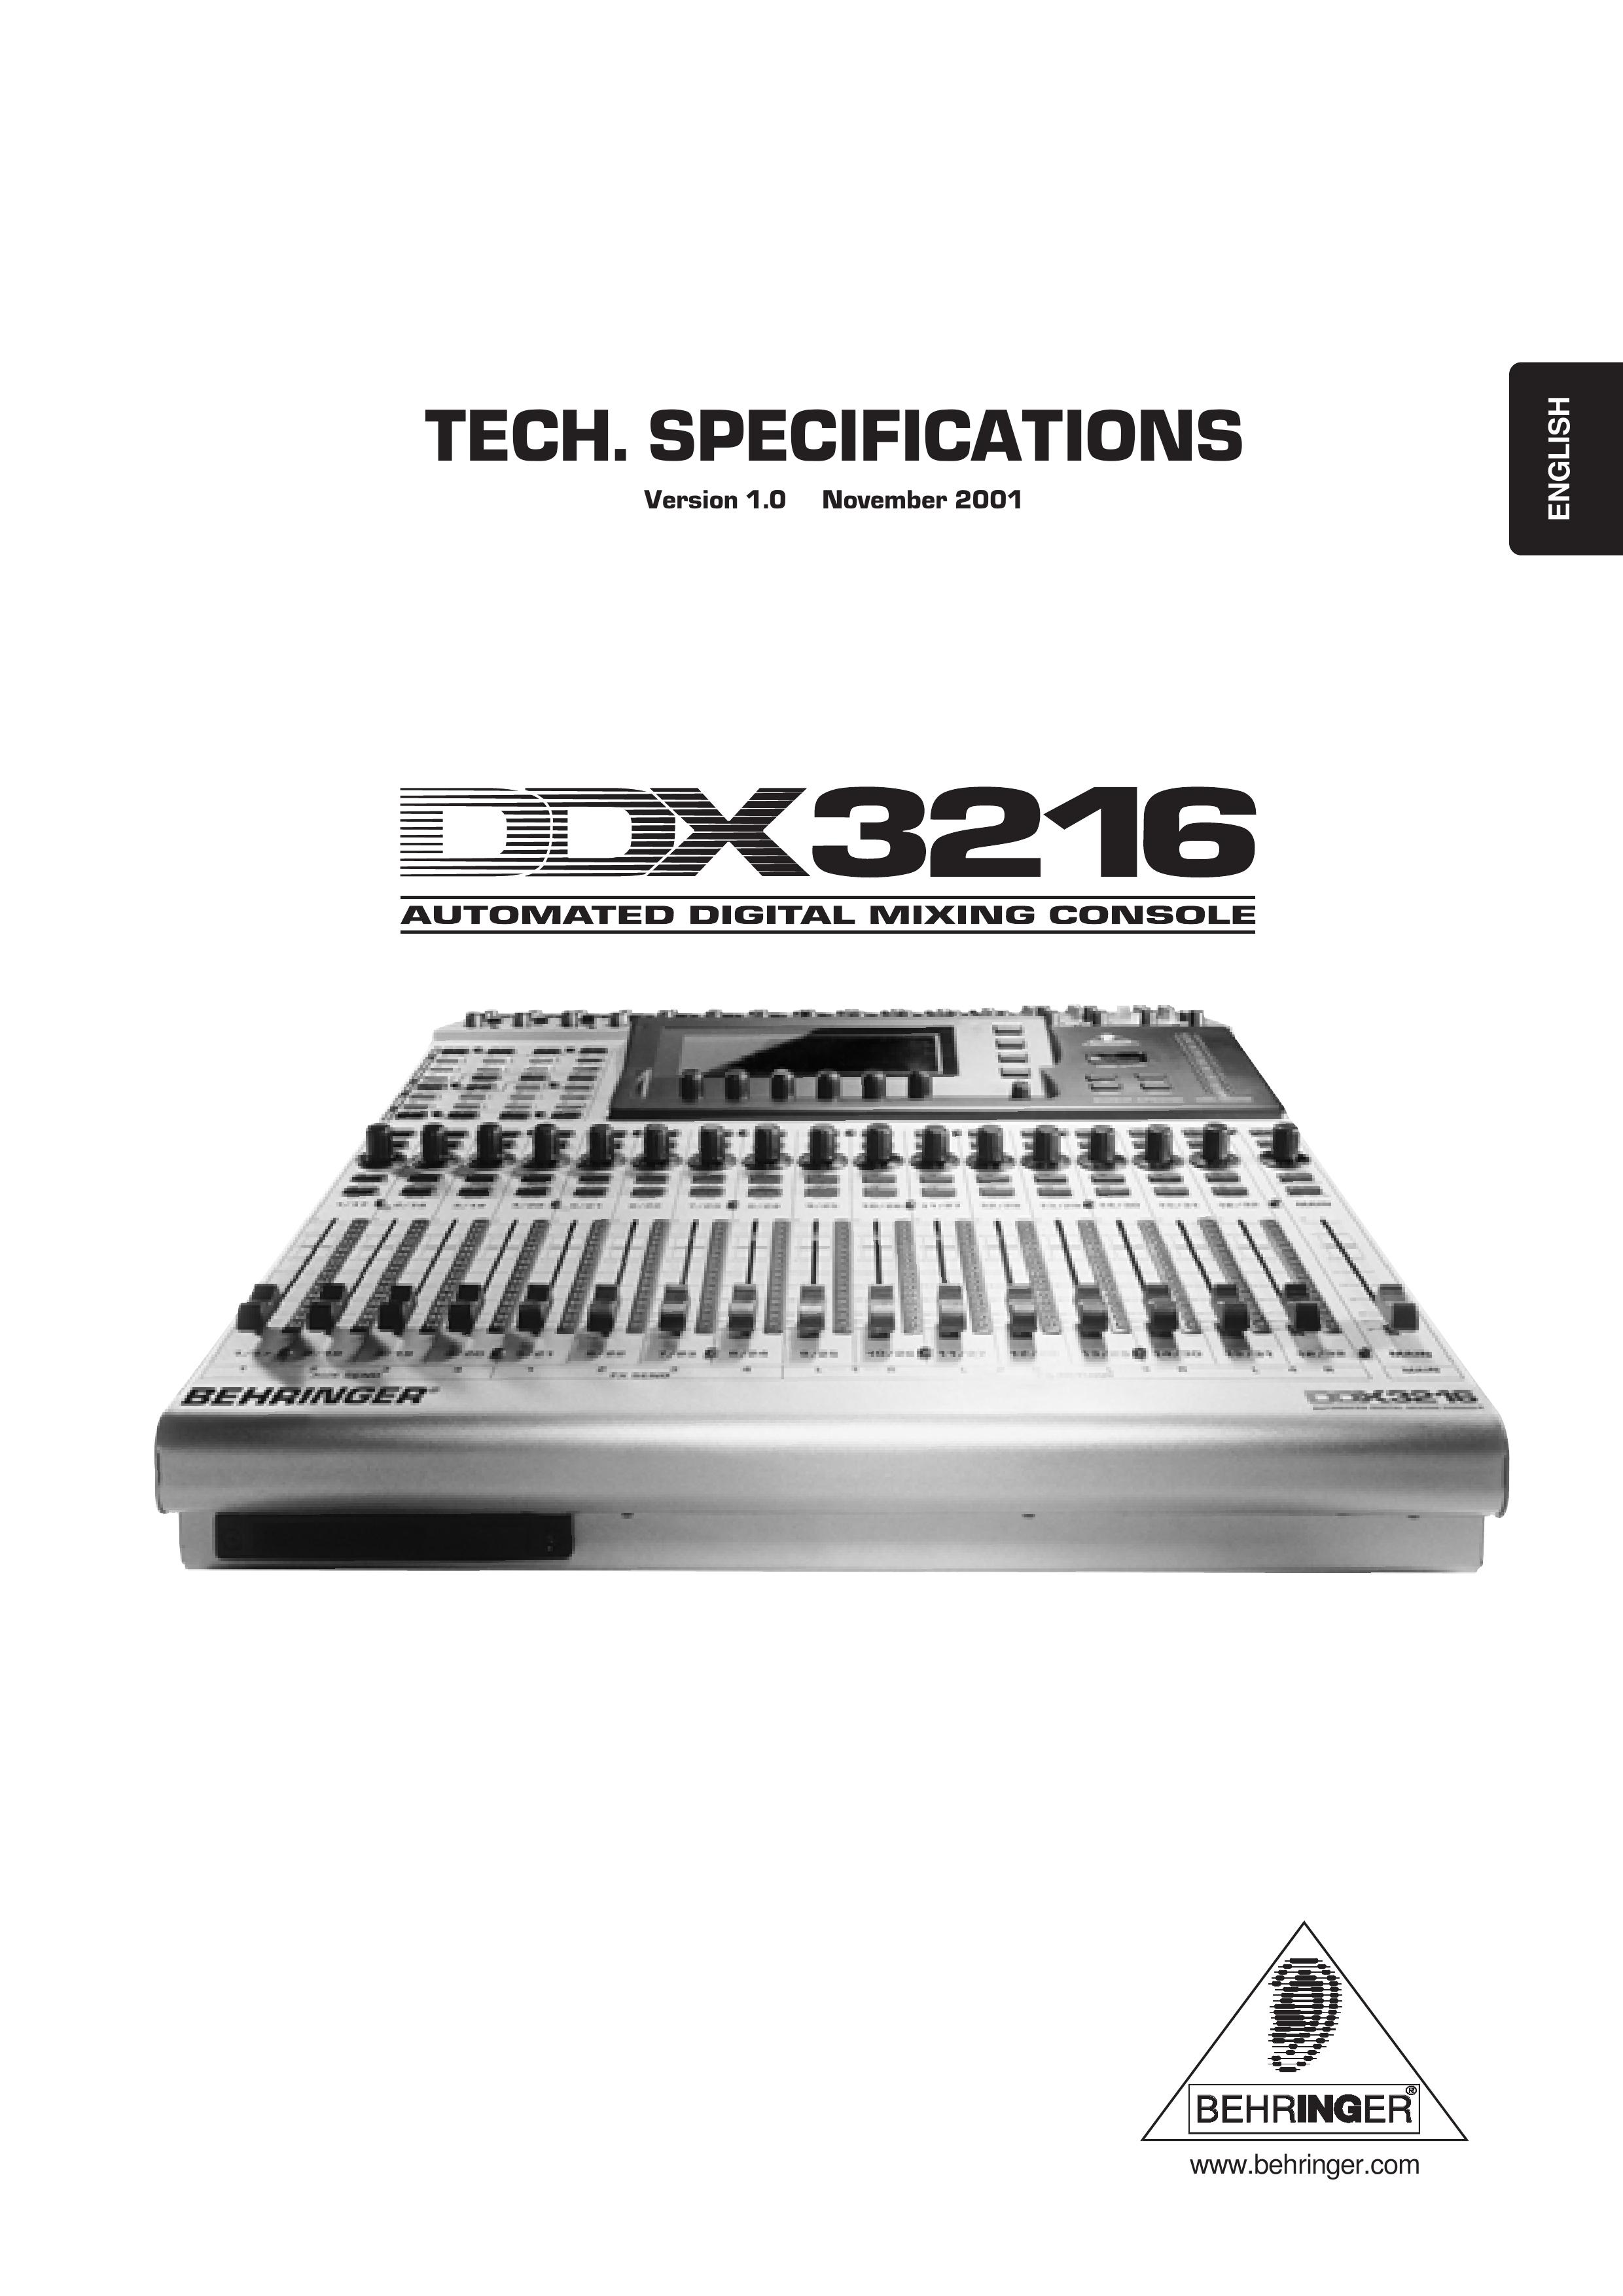 Behringer ddx3216 Music Mixer User Manual